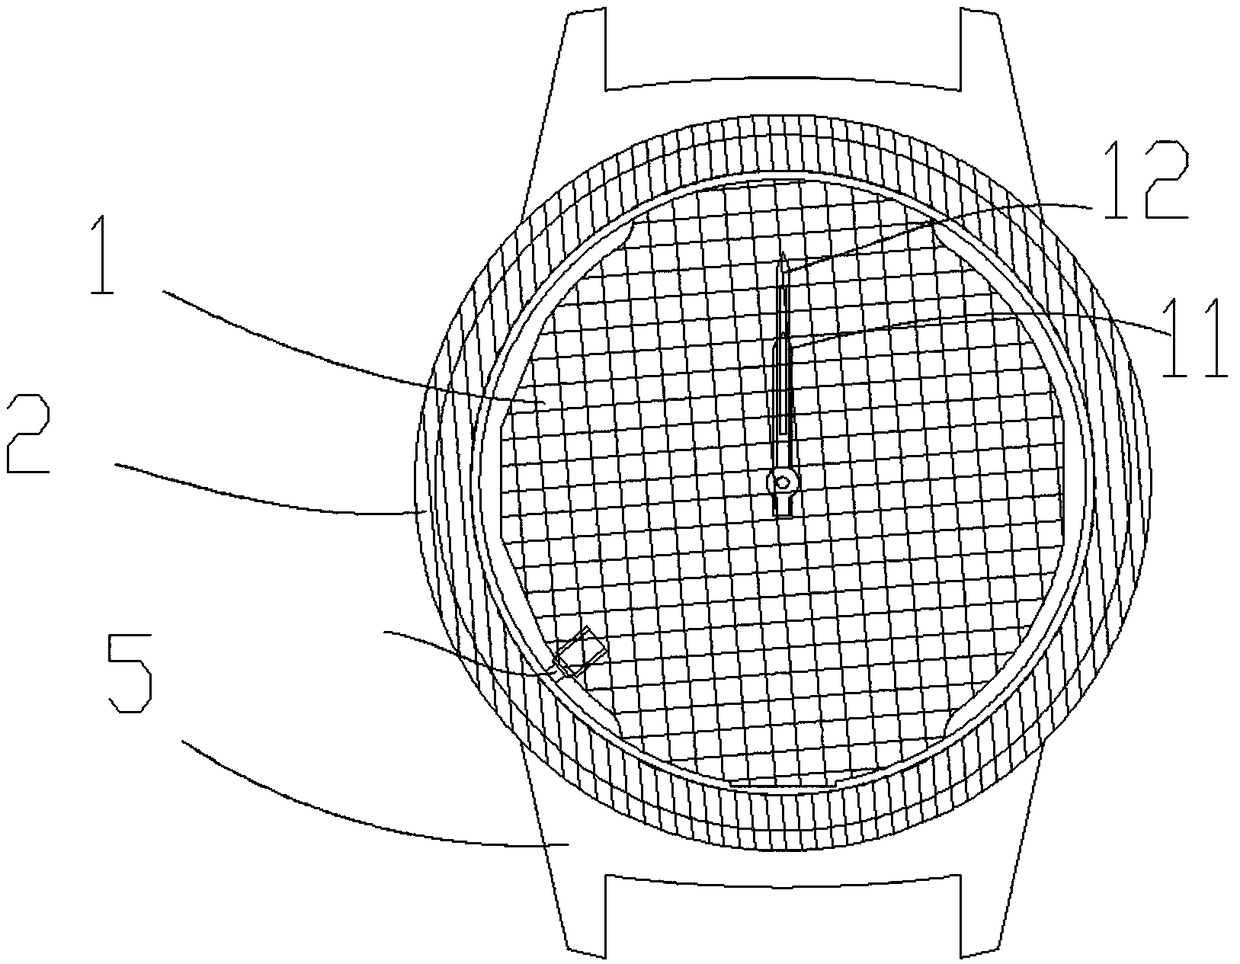 A novel GPS and BT dual-band antenna of a smart watch